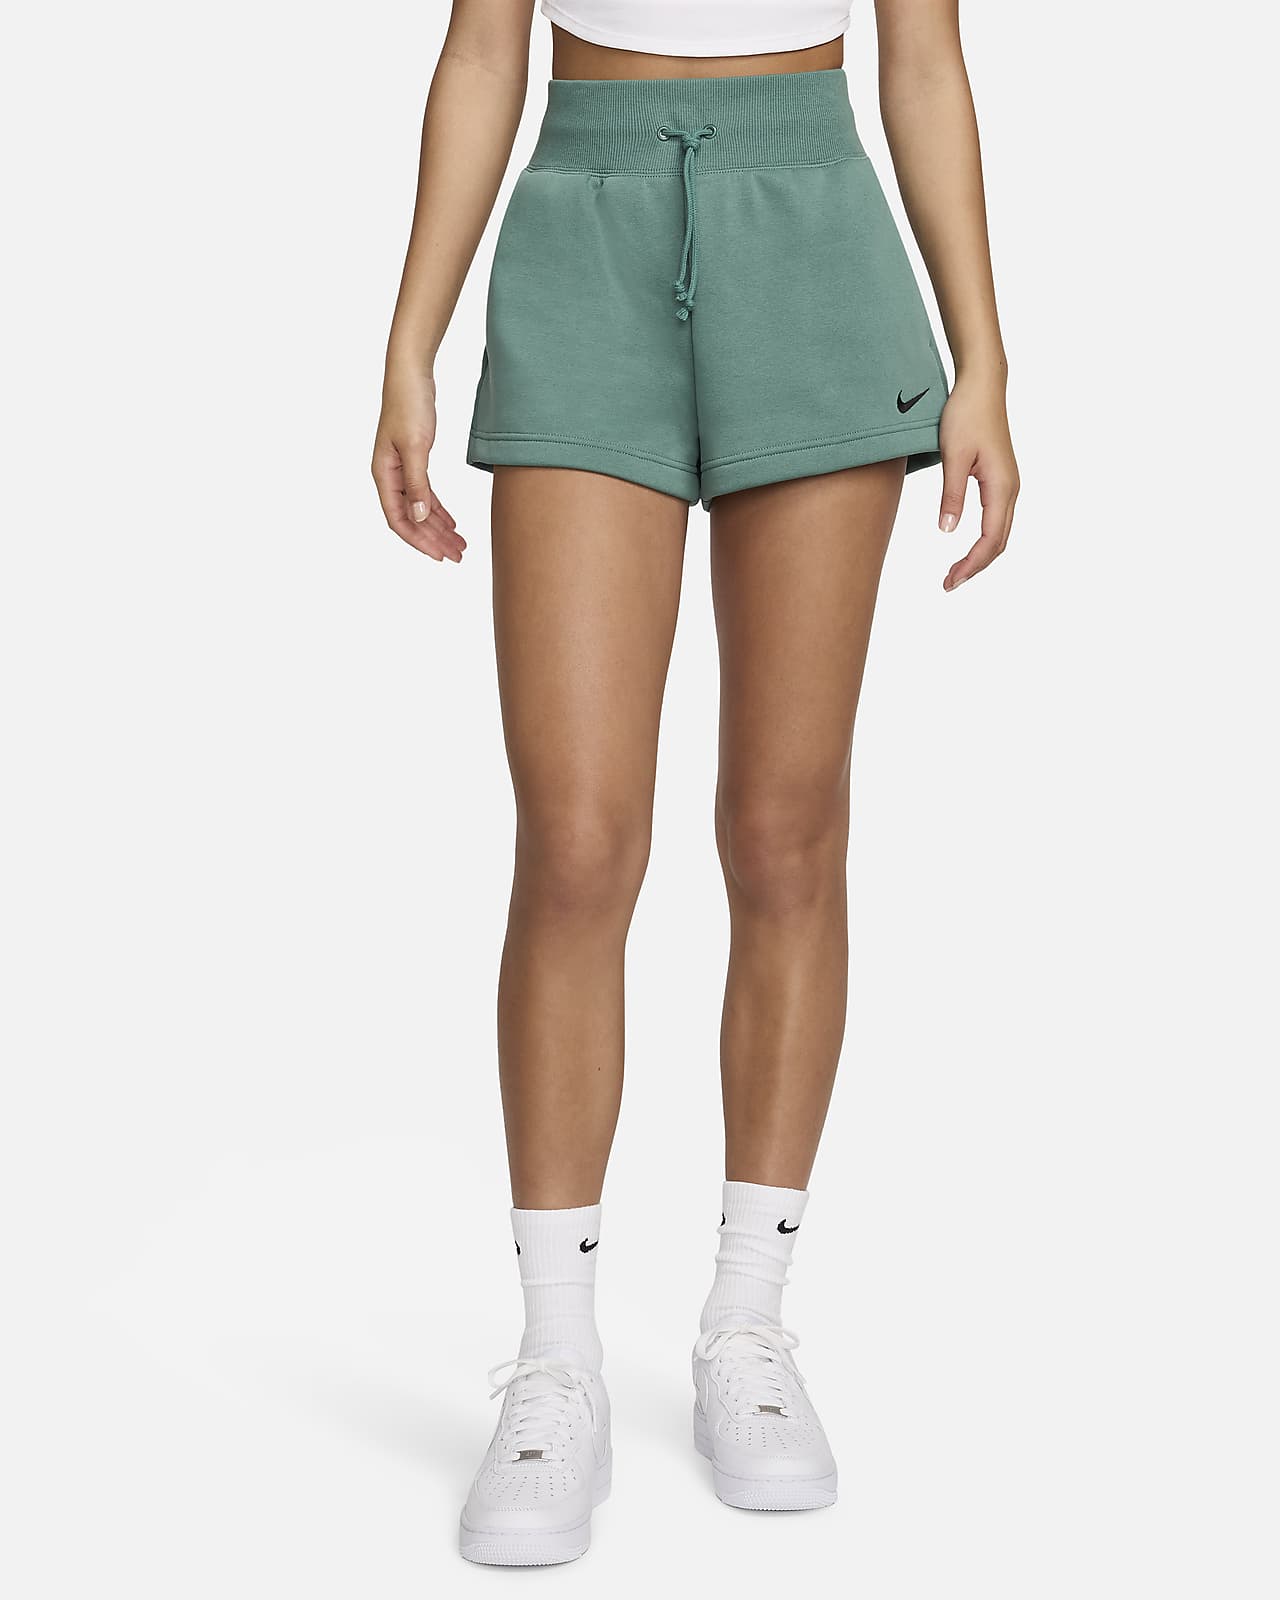 Shorts de ajuste holgado y tiro alto para mujer Nike Sportswear Phoenix Fleece